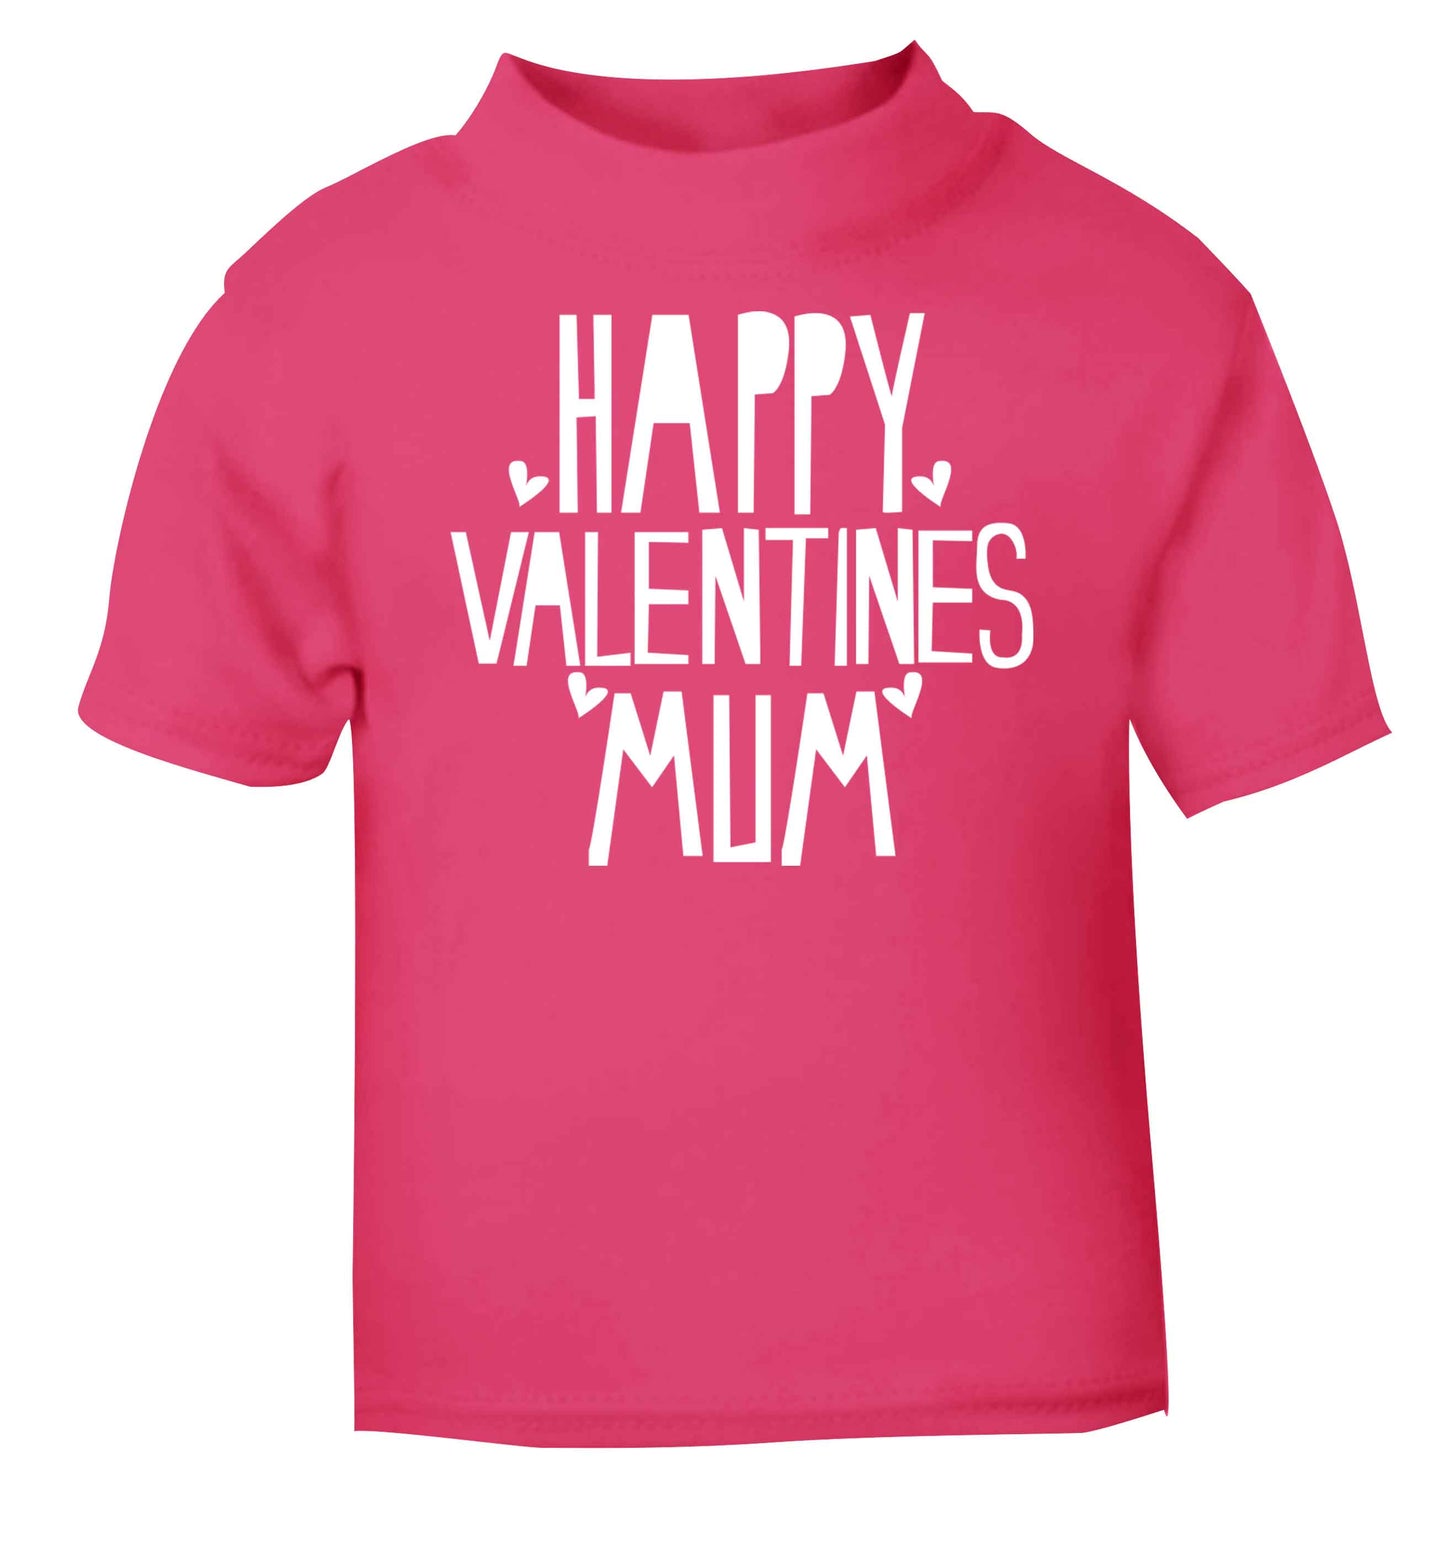 Happy valentines mum pink baby toddler Tshirt 2 Years